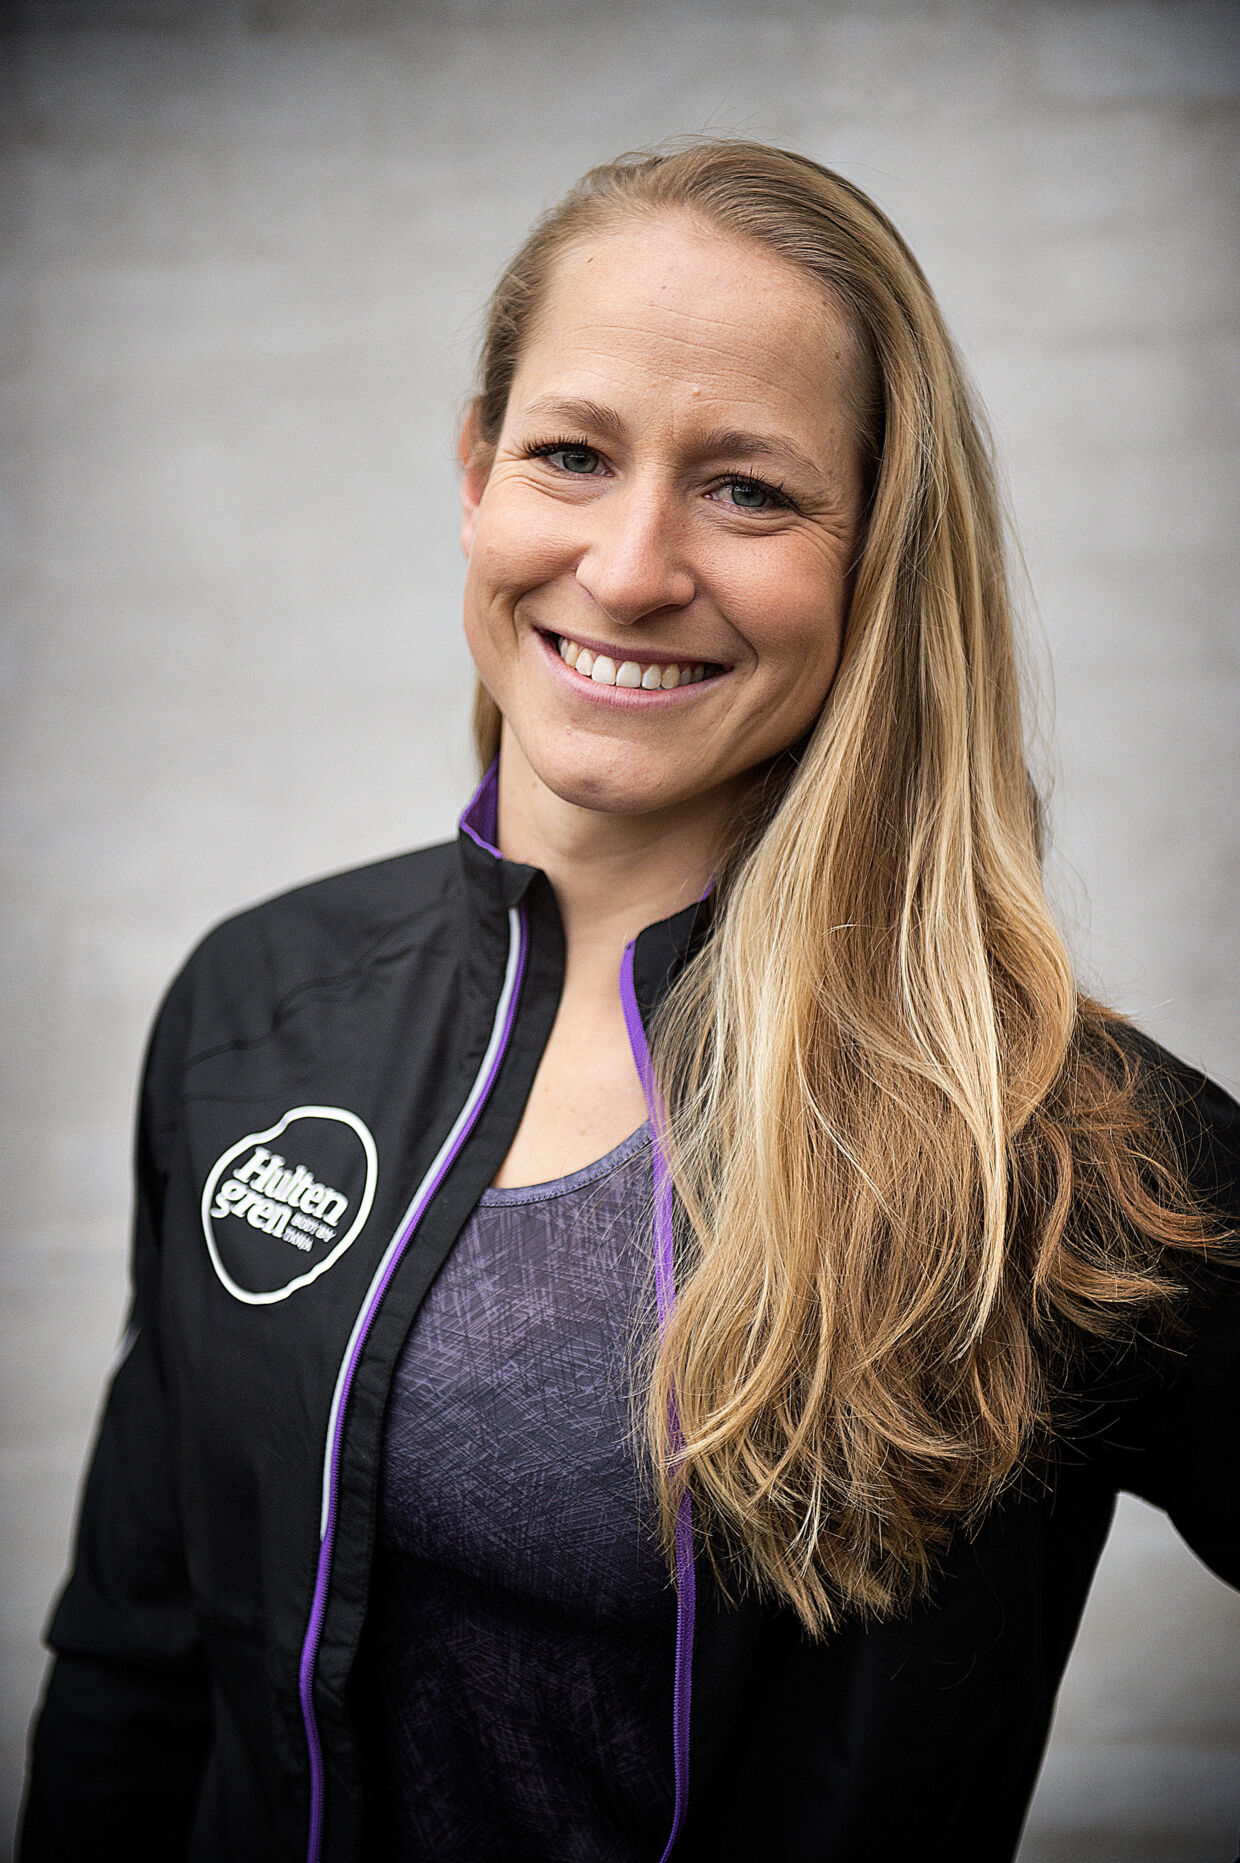 Tanja Hultengren Larsson er humanfysiolog og personlig træner for Robert Hansen op til Powerman Denmark 2016. FOTO: NILS MEILVANG